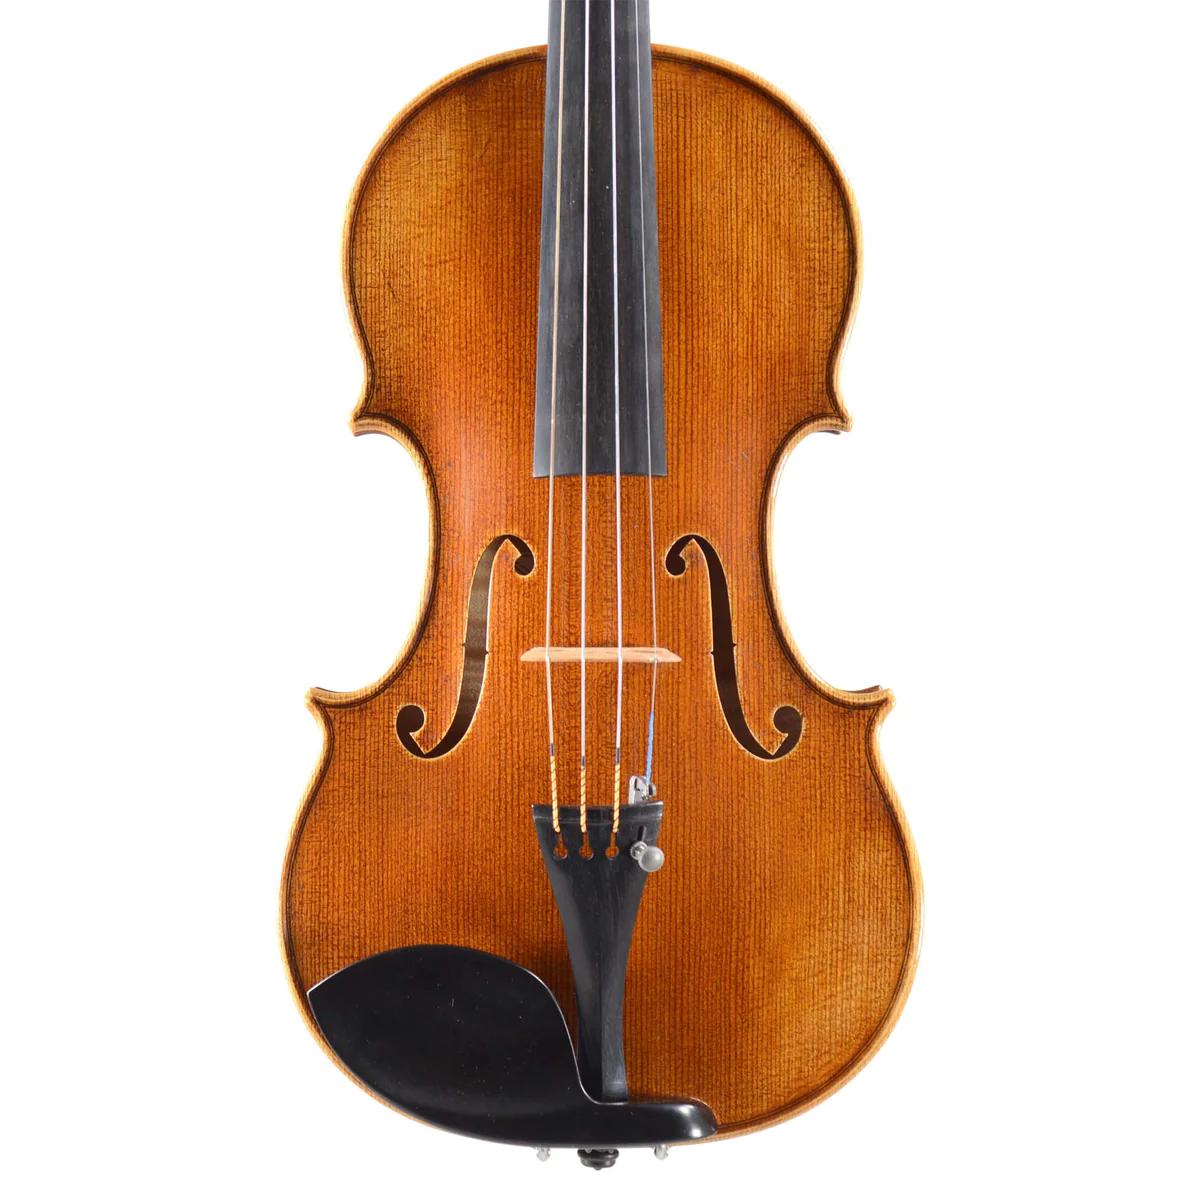 granada violin - Is Granada a good violin brand